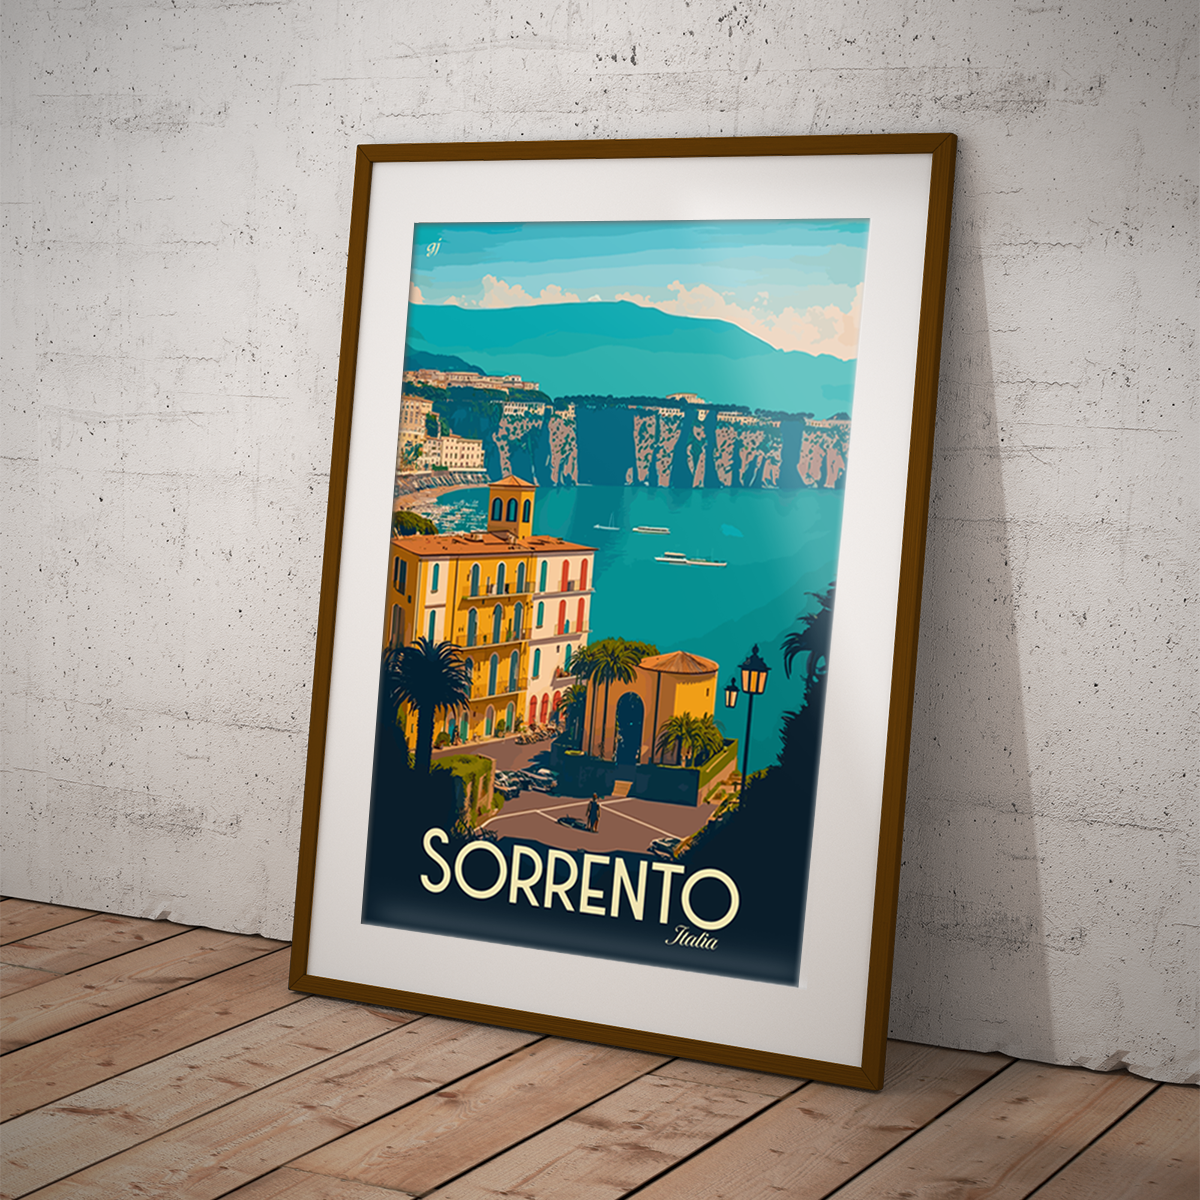 Sorrento poster by bon voyage design